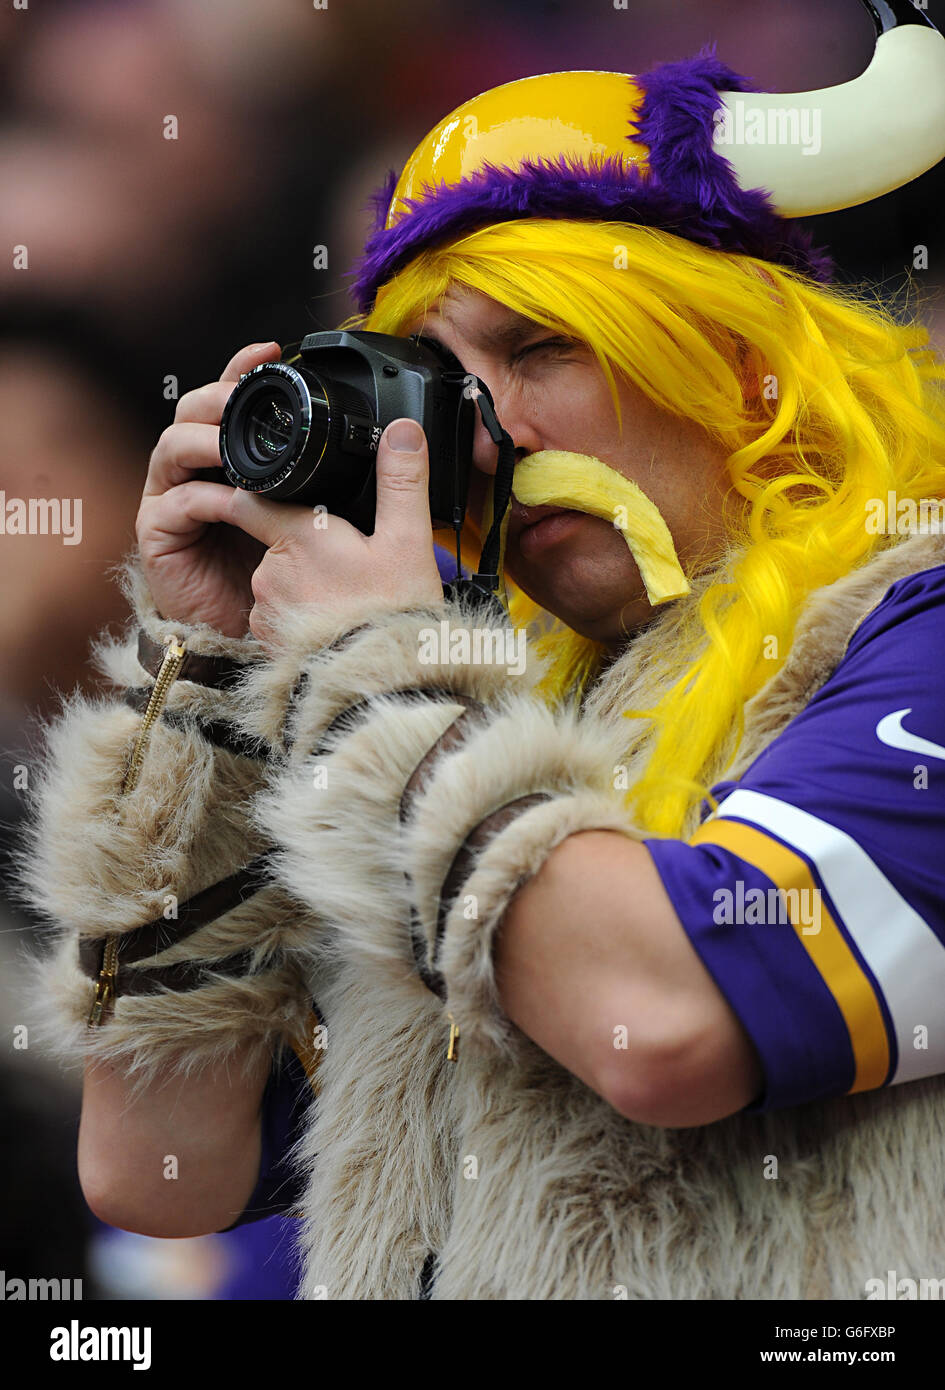 Football americano - NFL International Series 2013 - Minnesota Vikings v Pittsburgh Steelers - Wembley Stadium Foto Stock